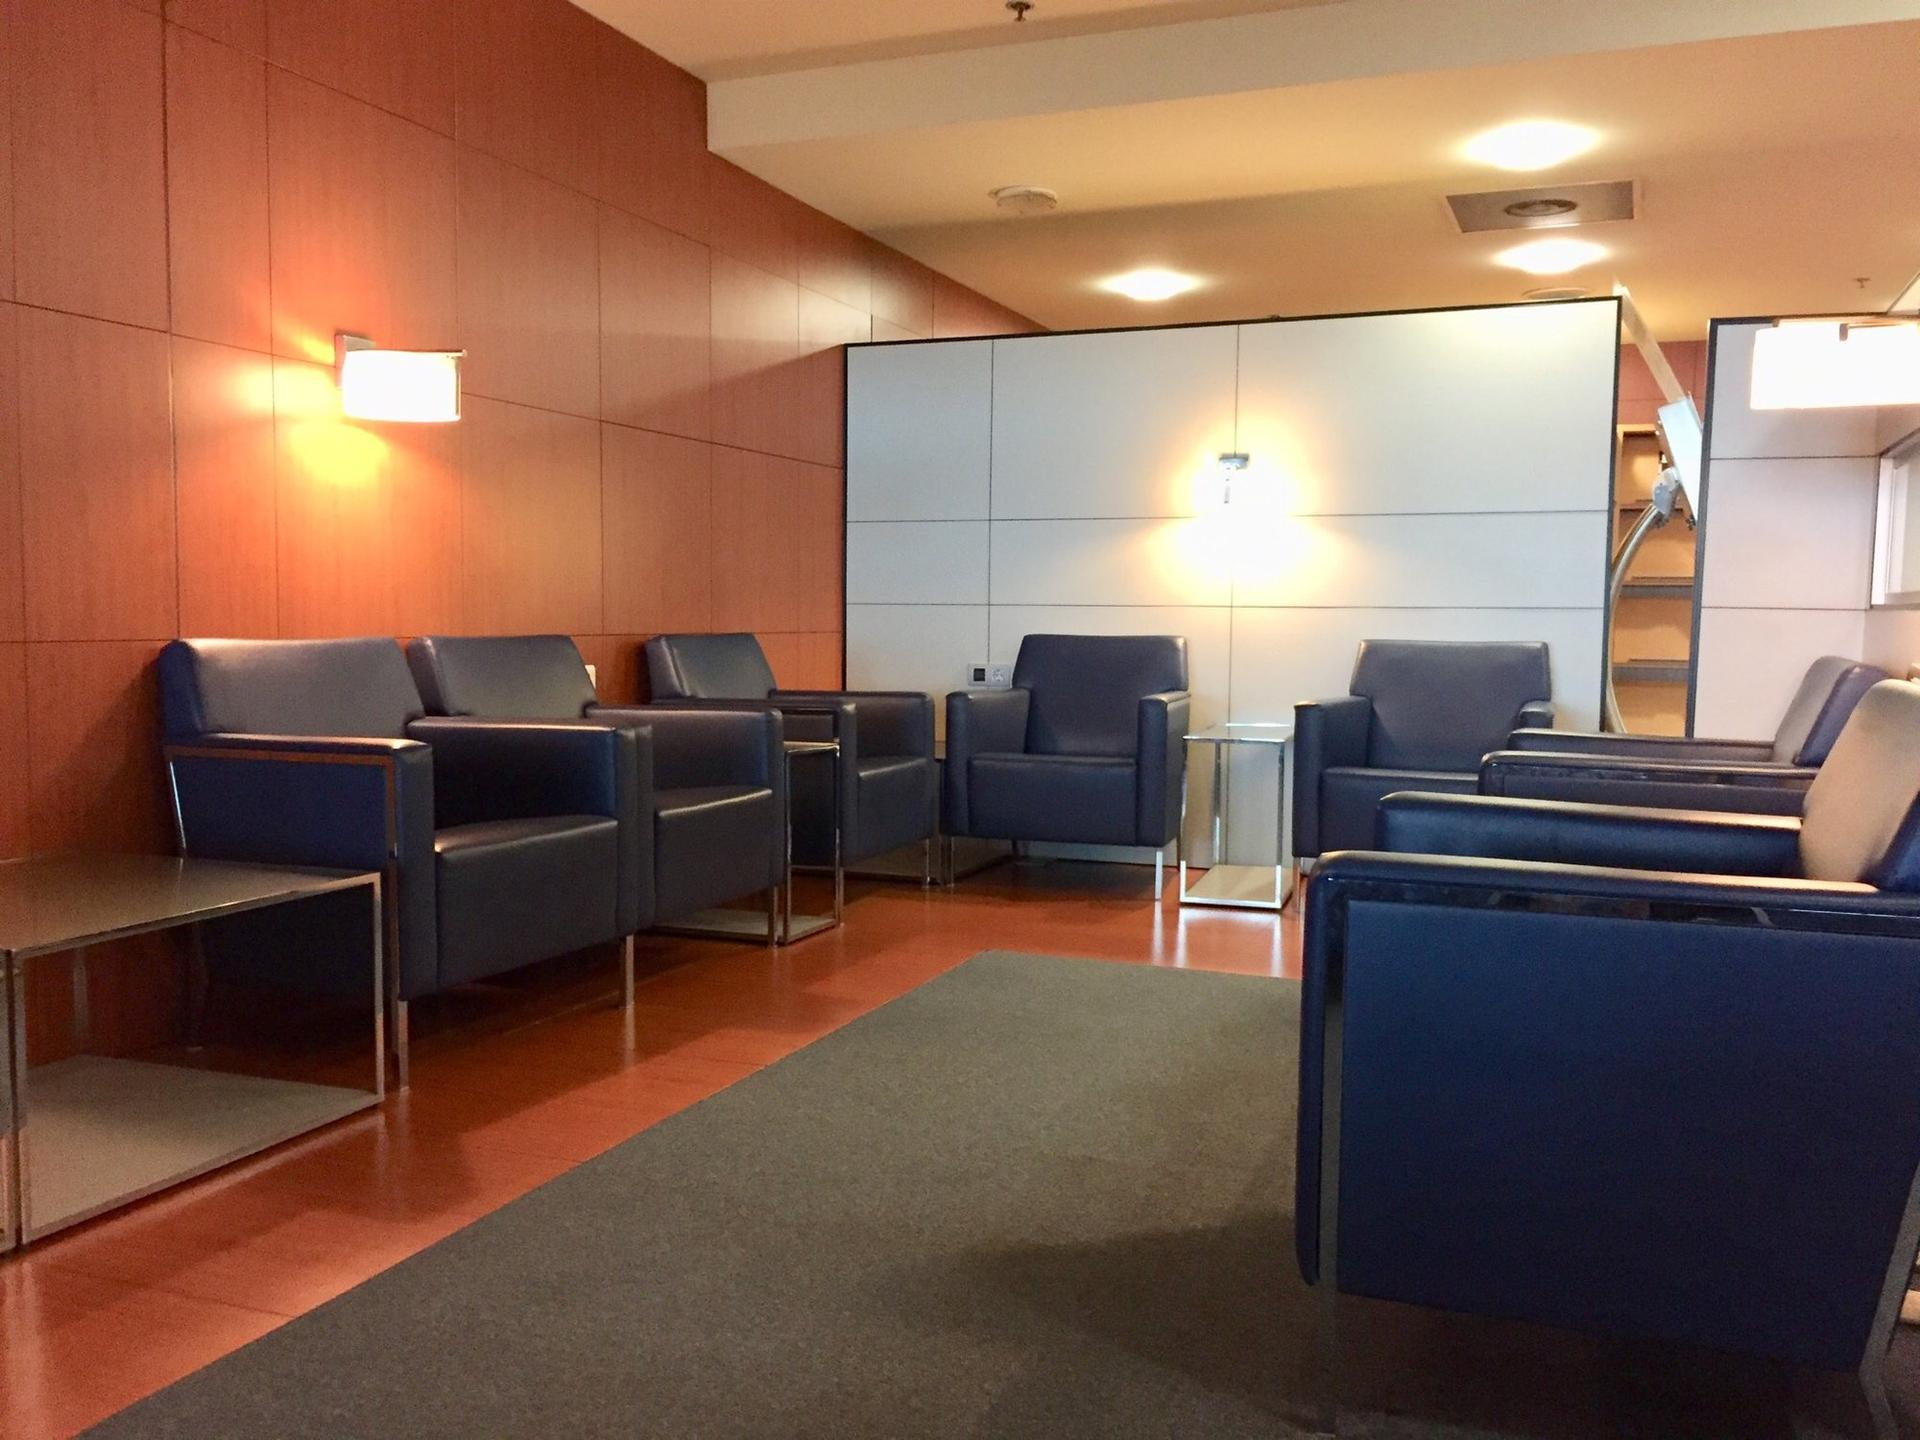 ANA Airport Lounge image 1 of 48